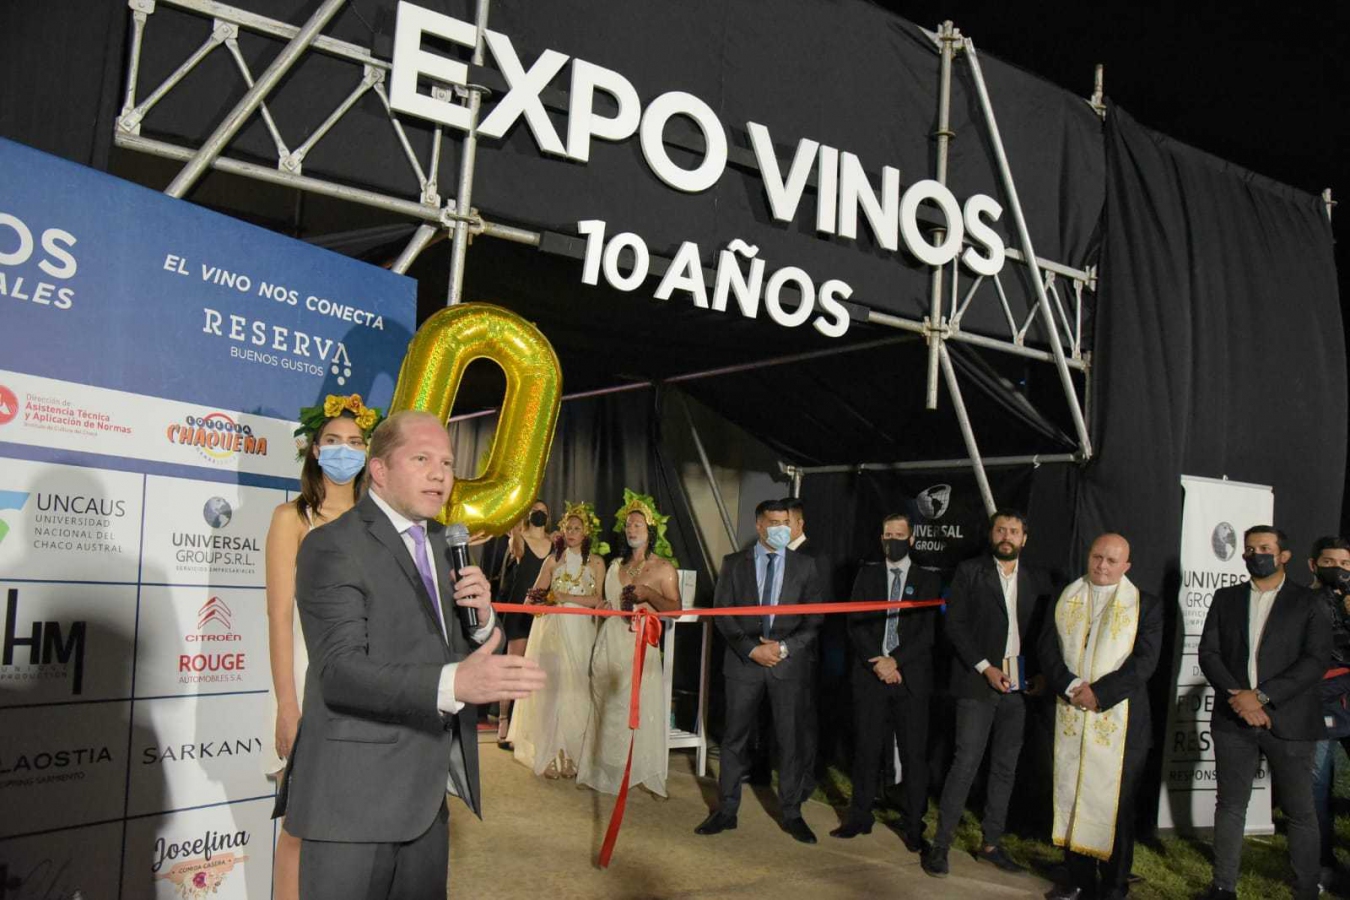 Expo_Vinos_